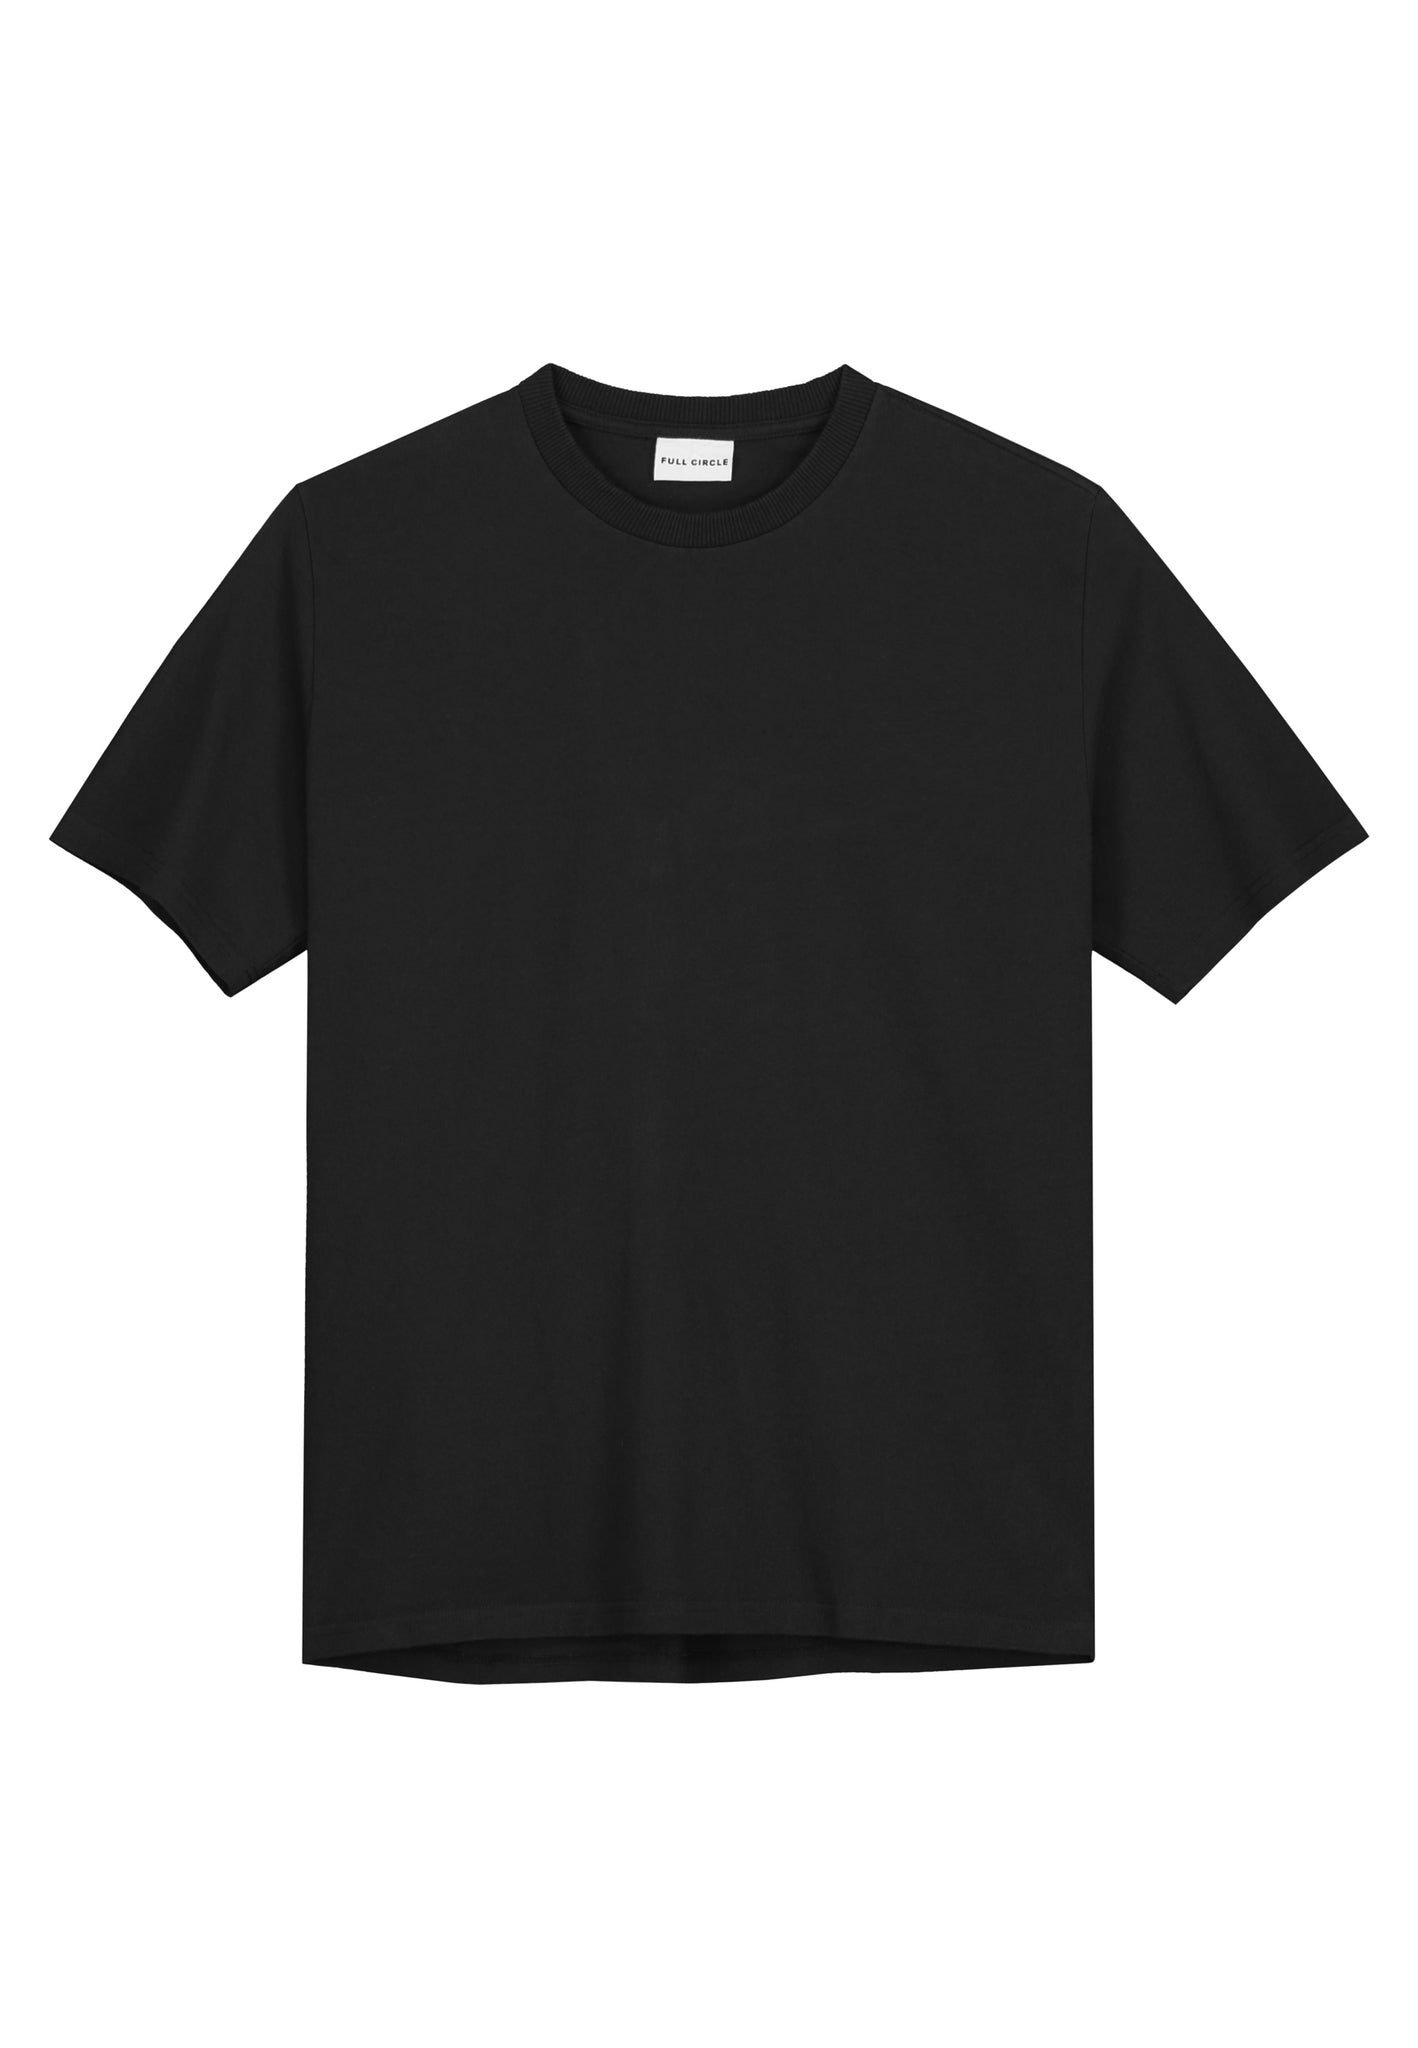 Full Circle Basic T-Shirt (Black) – Full Circle Clothing